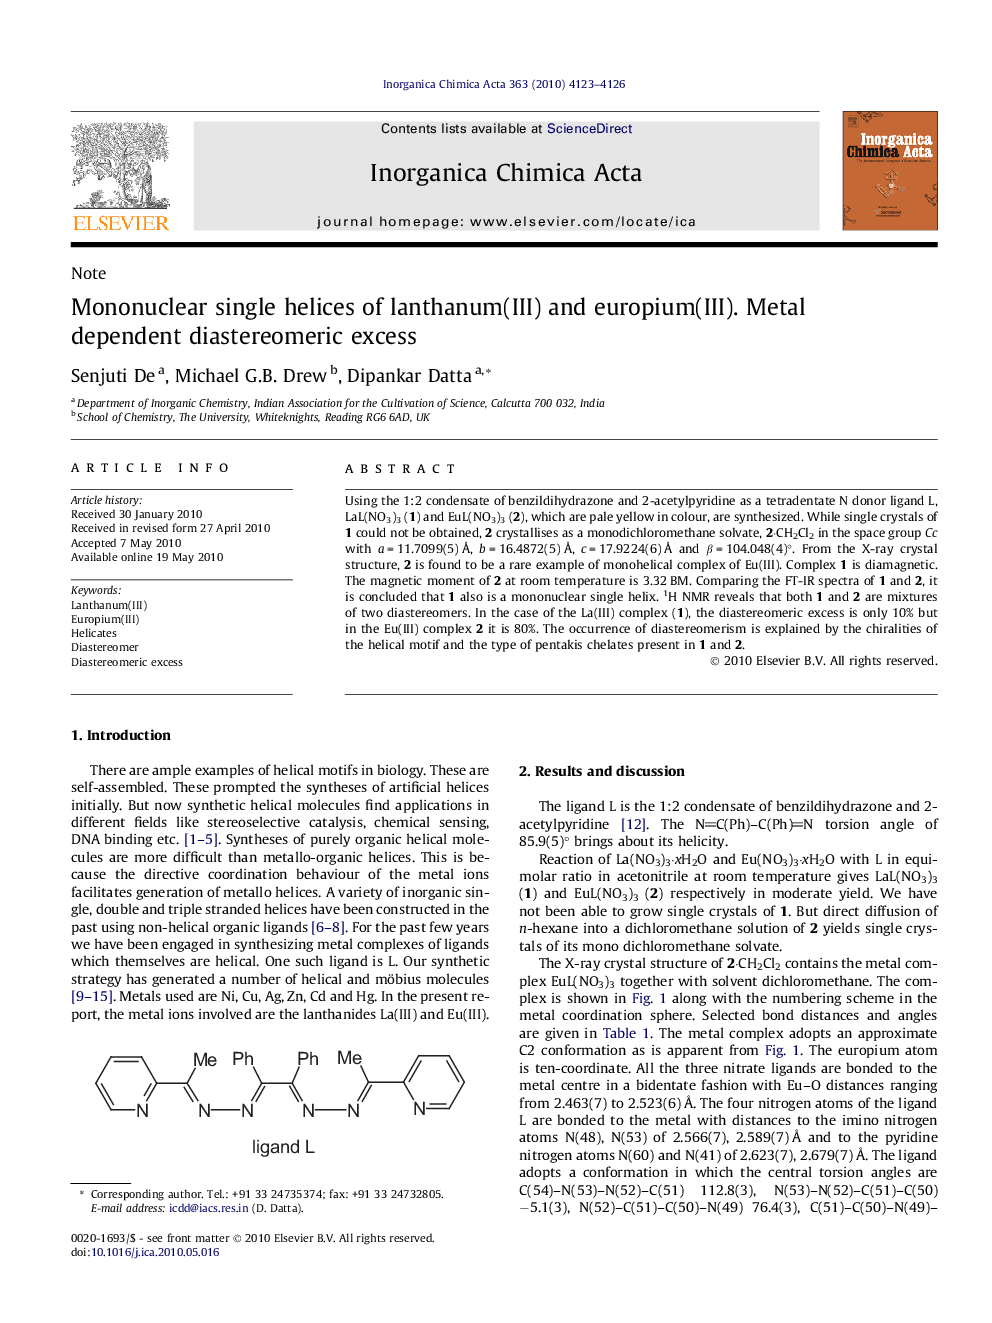 Mononuclear single helices of lanthanum(III) and europium(III). Metal dependent diastereomeric excess